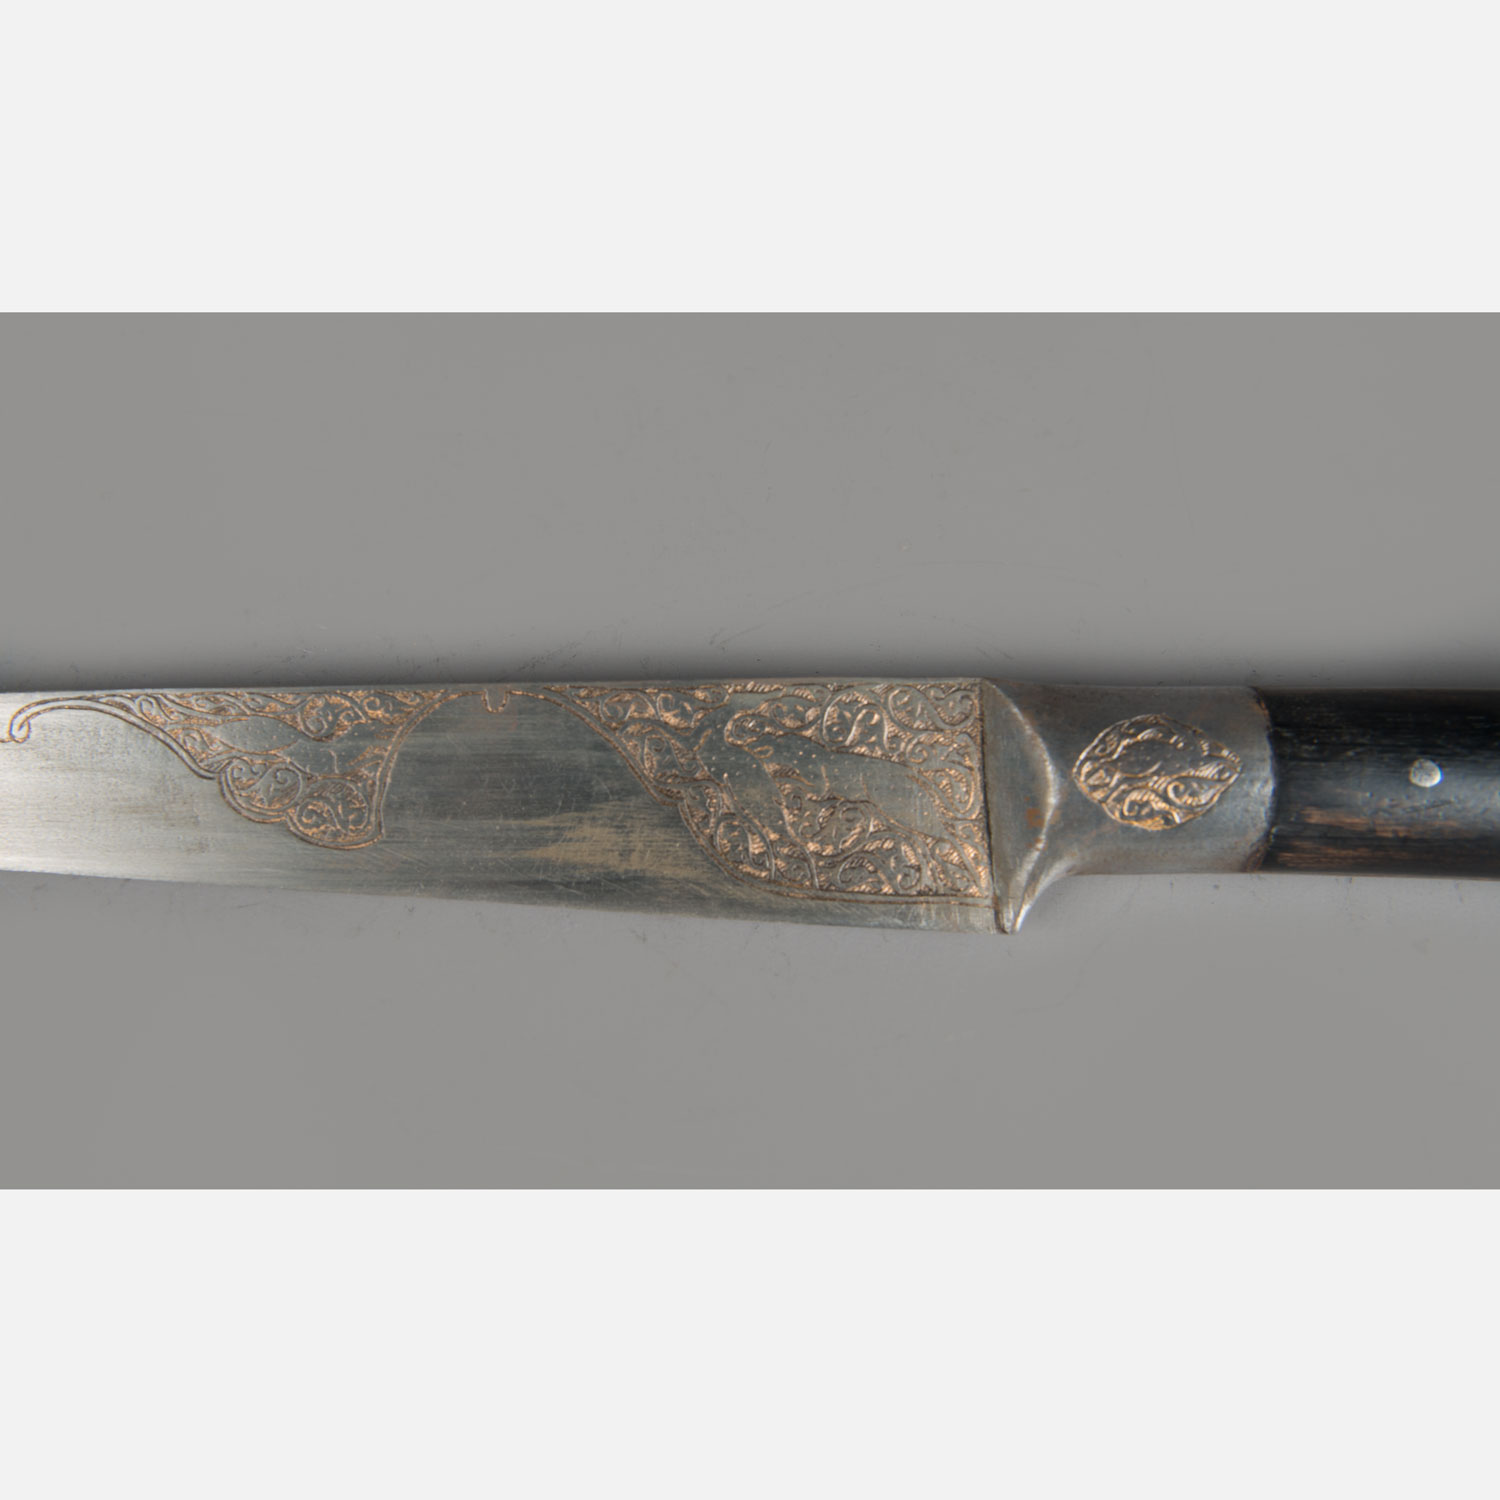 Oriental dagger - Image 2 of 3